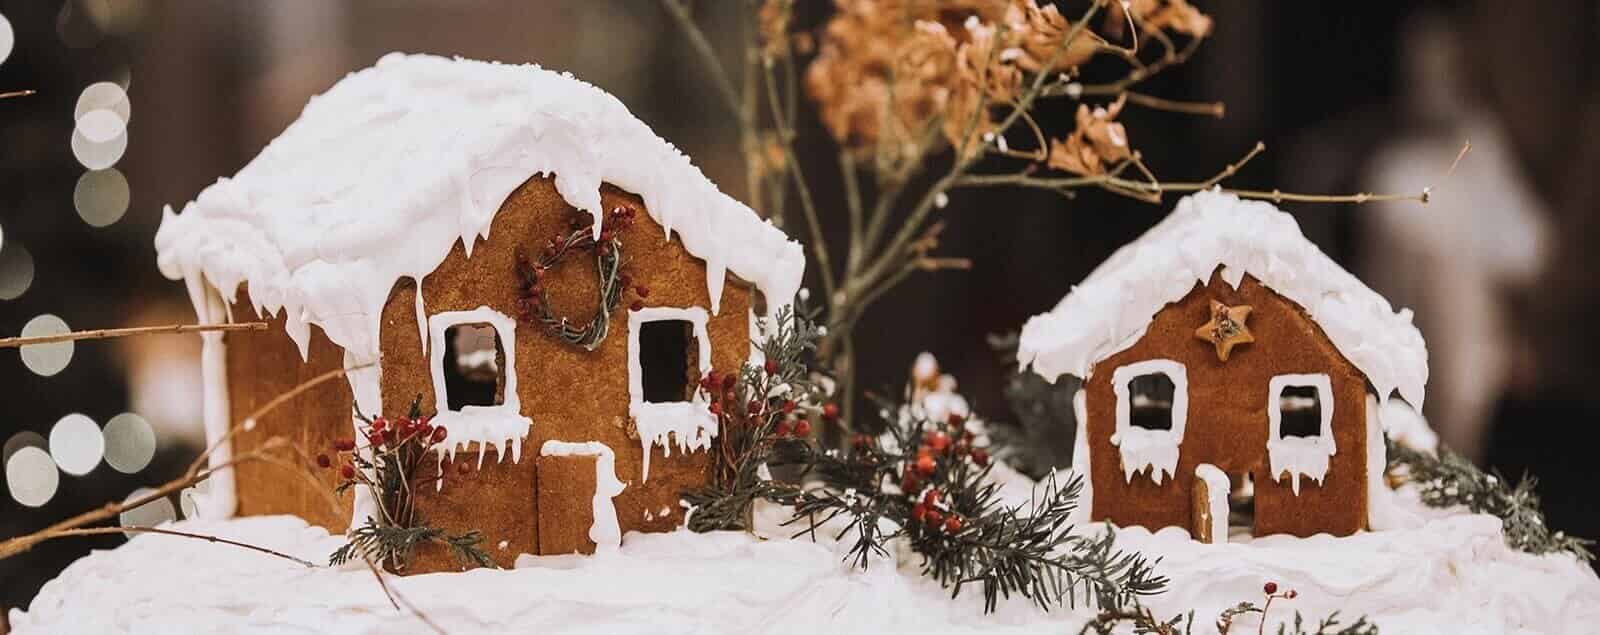 Two gingerbread houses in winter scene